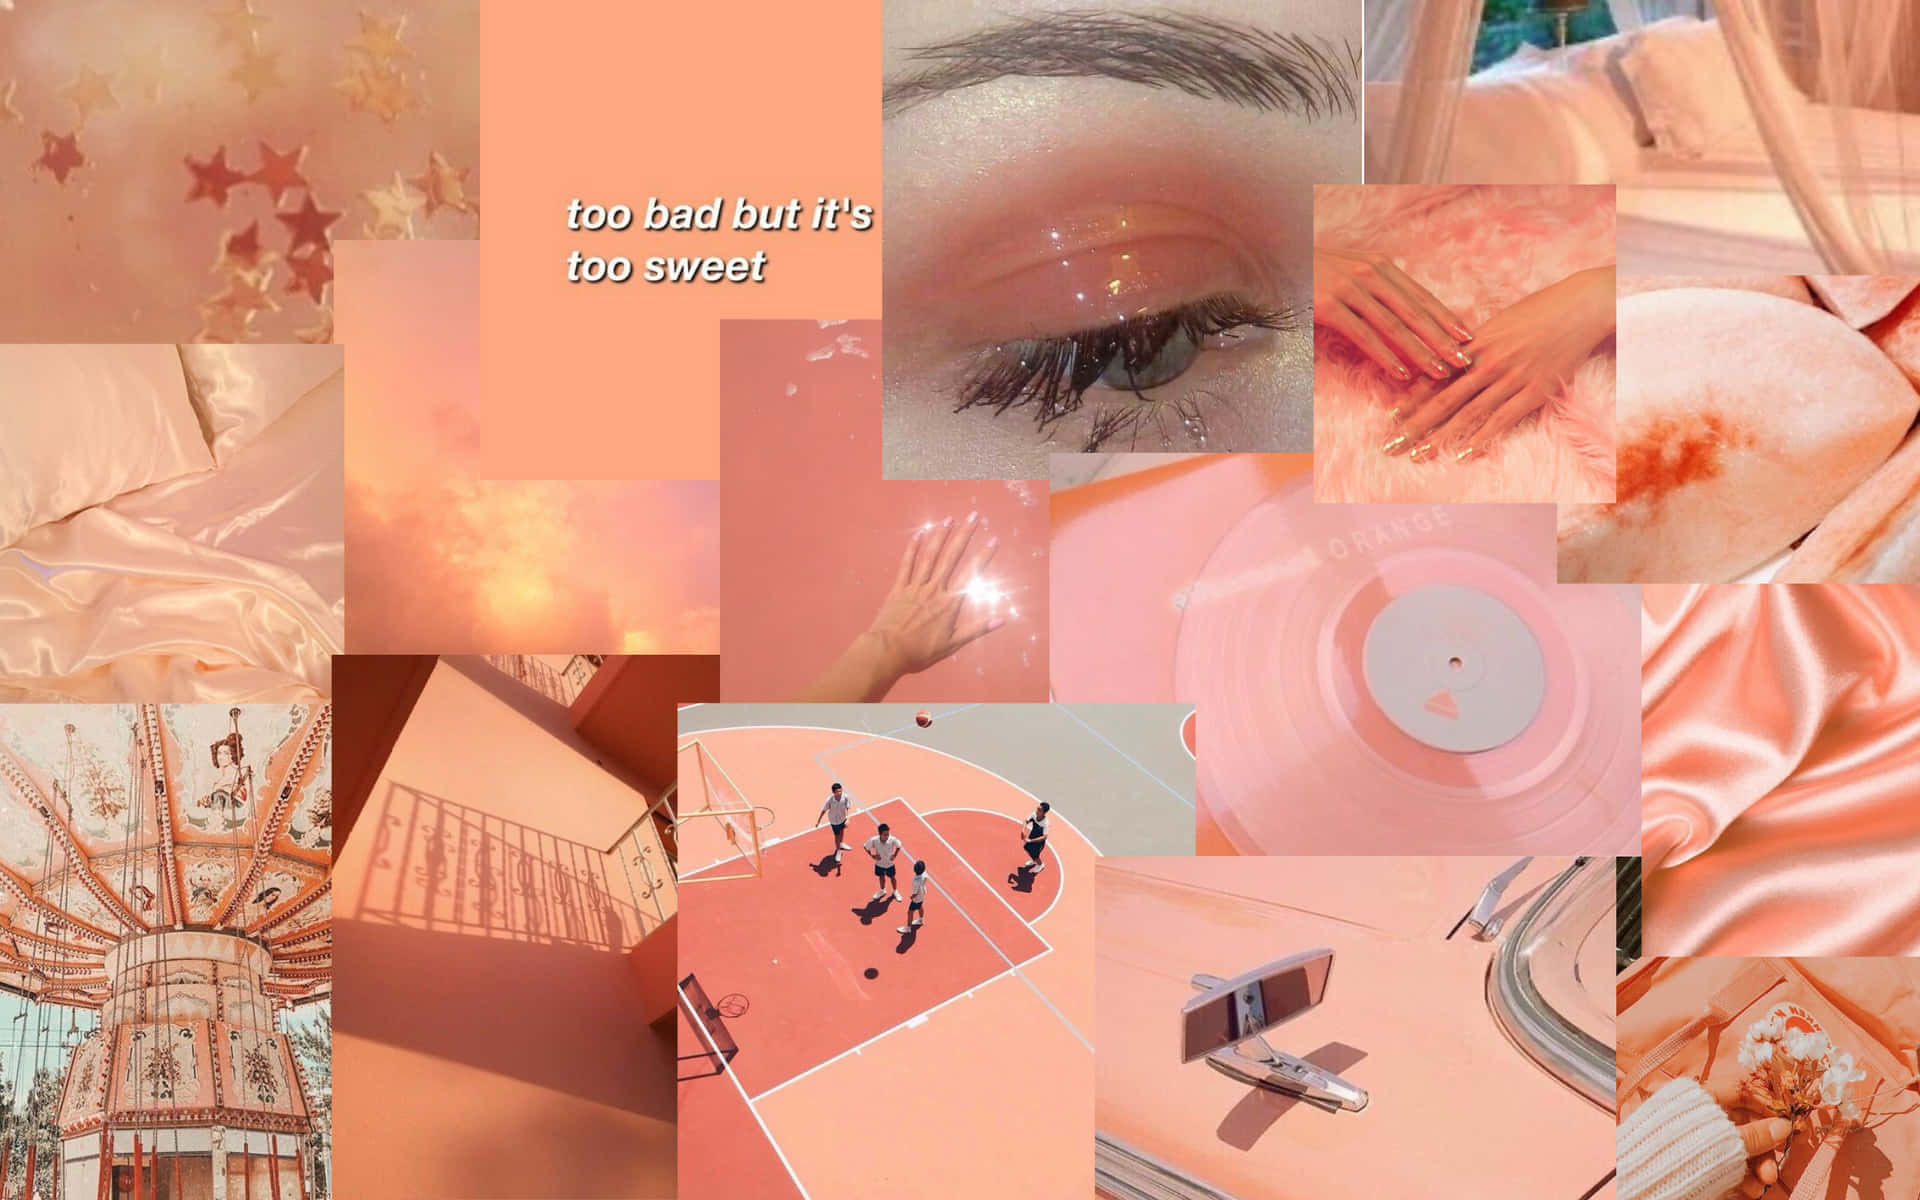 Pink Orange Aesthetic Collage Wallpaper